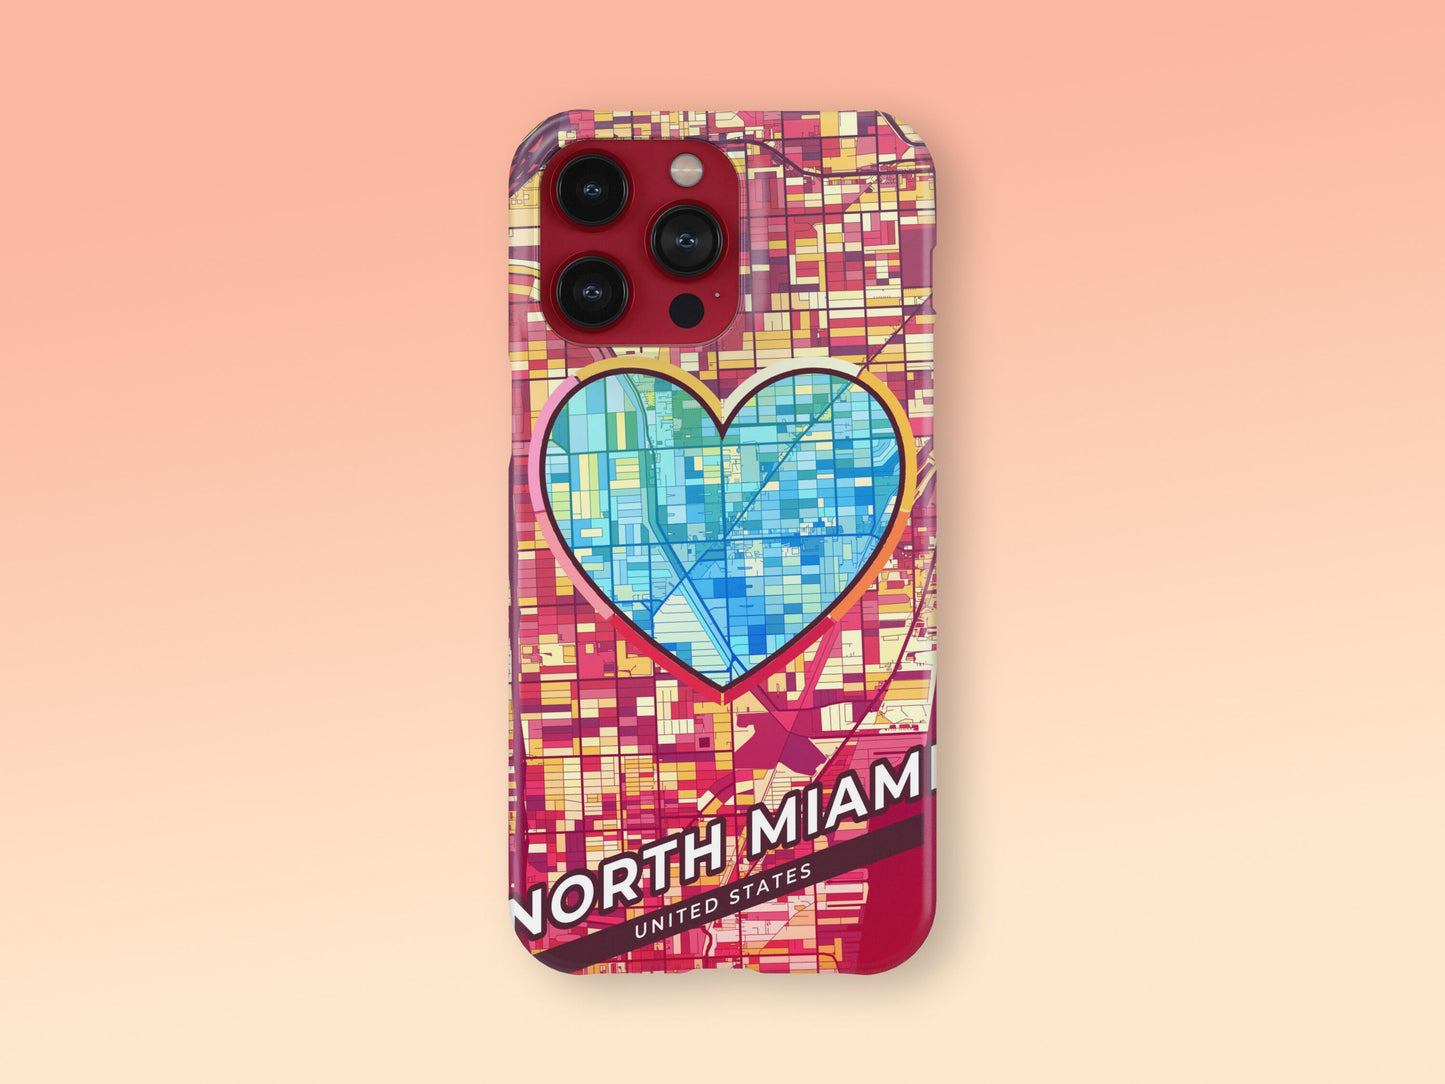 North Miami Florida slim phone case with colorful icon 2